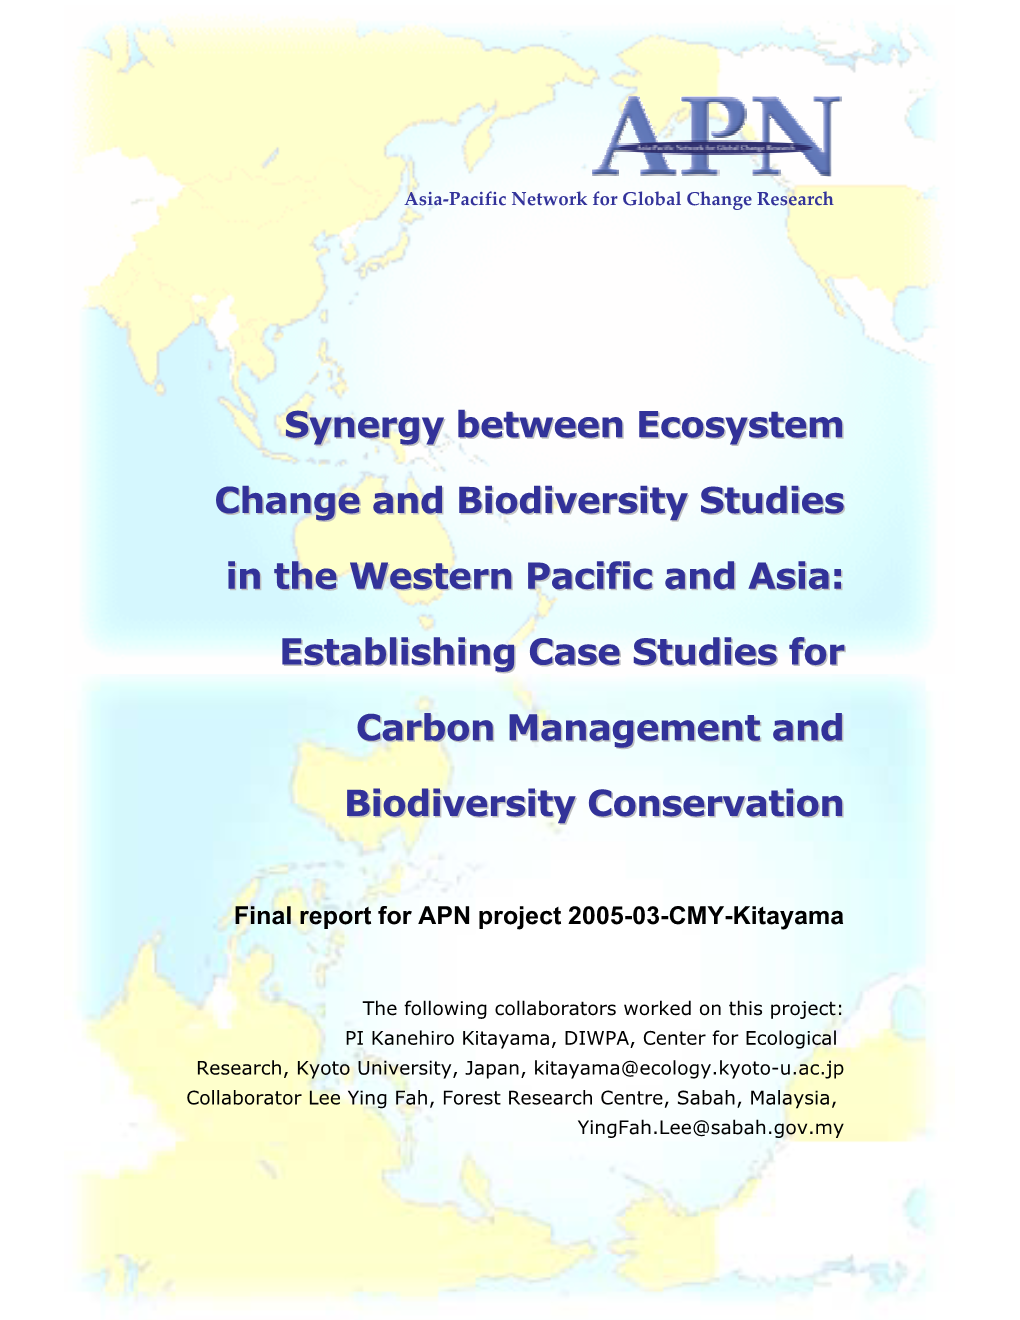 Establishing Case Studies for Carbon Management and Biodiversity Conservation